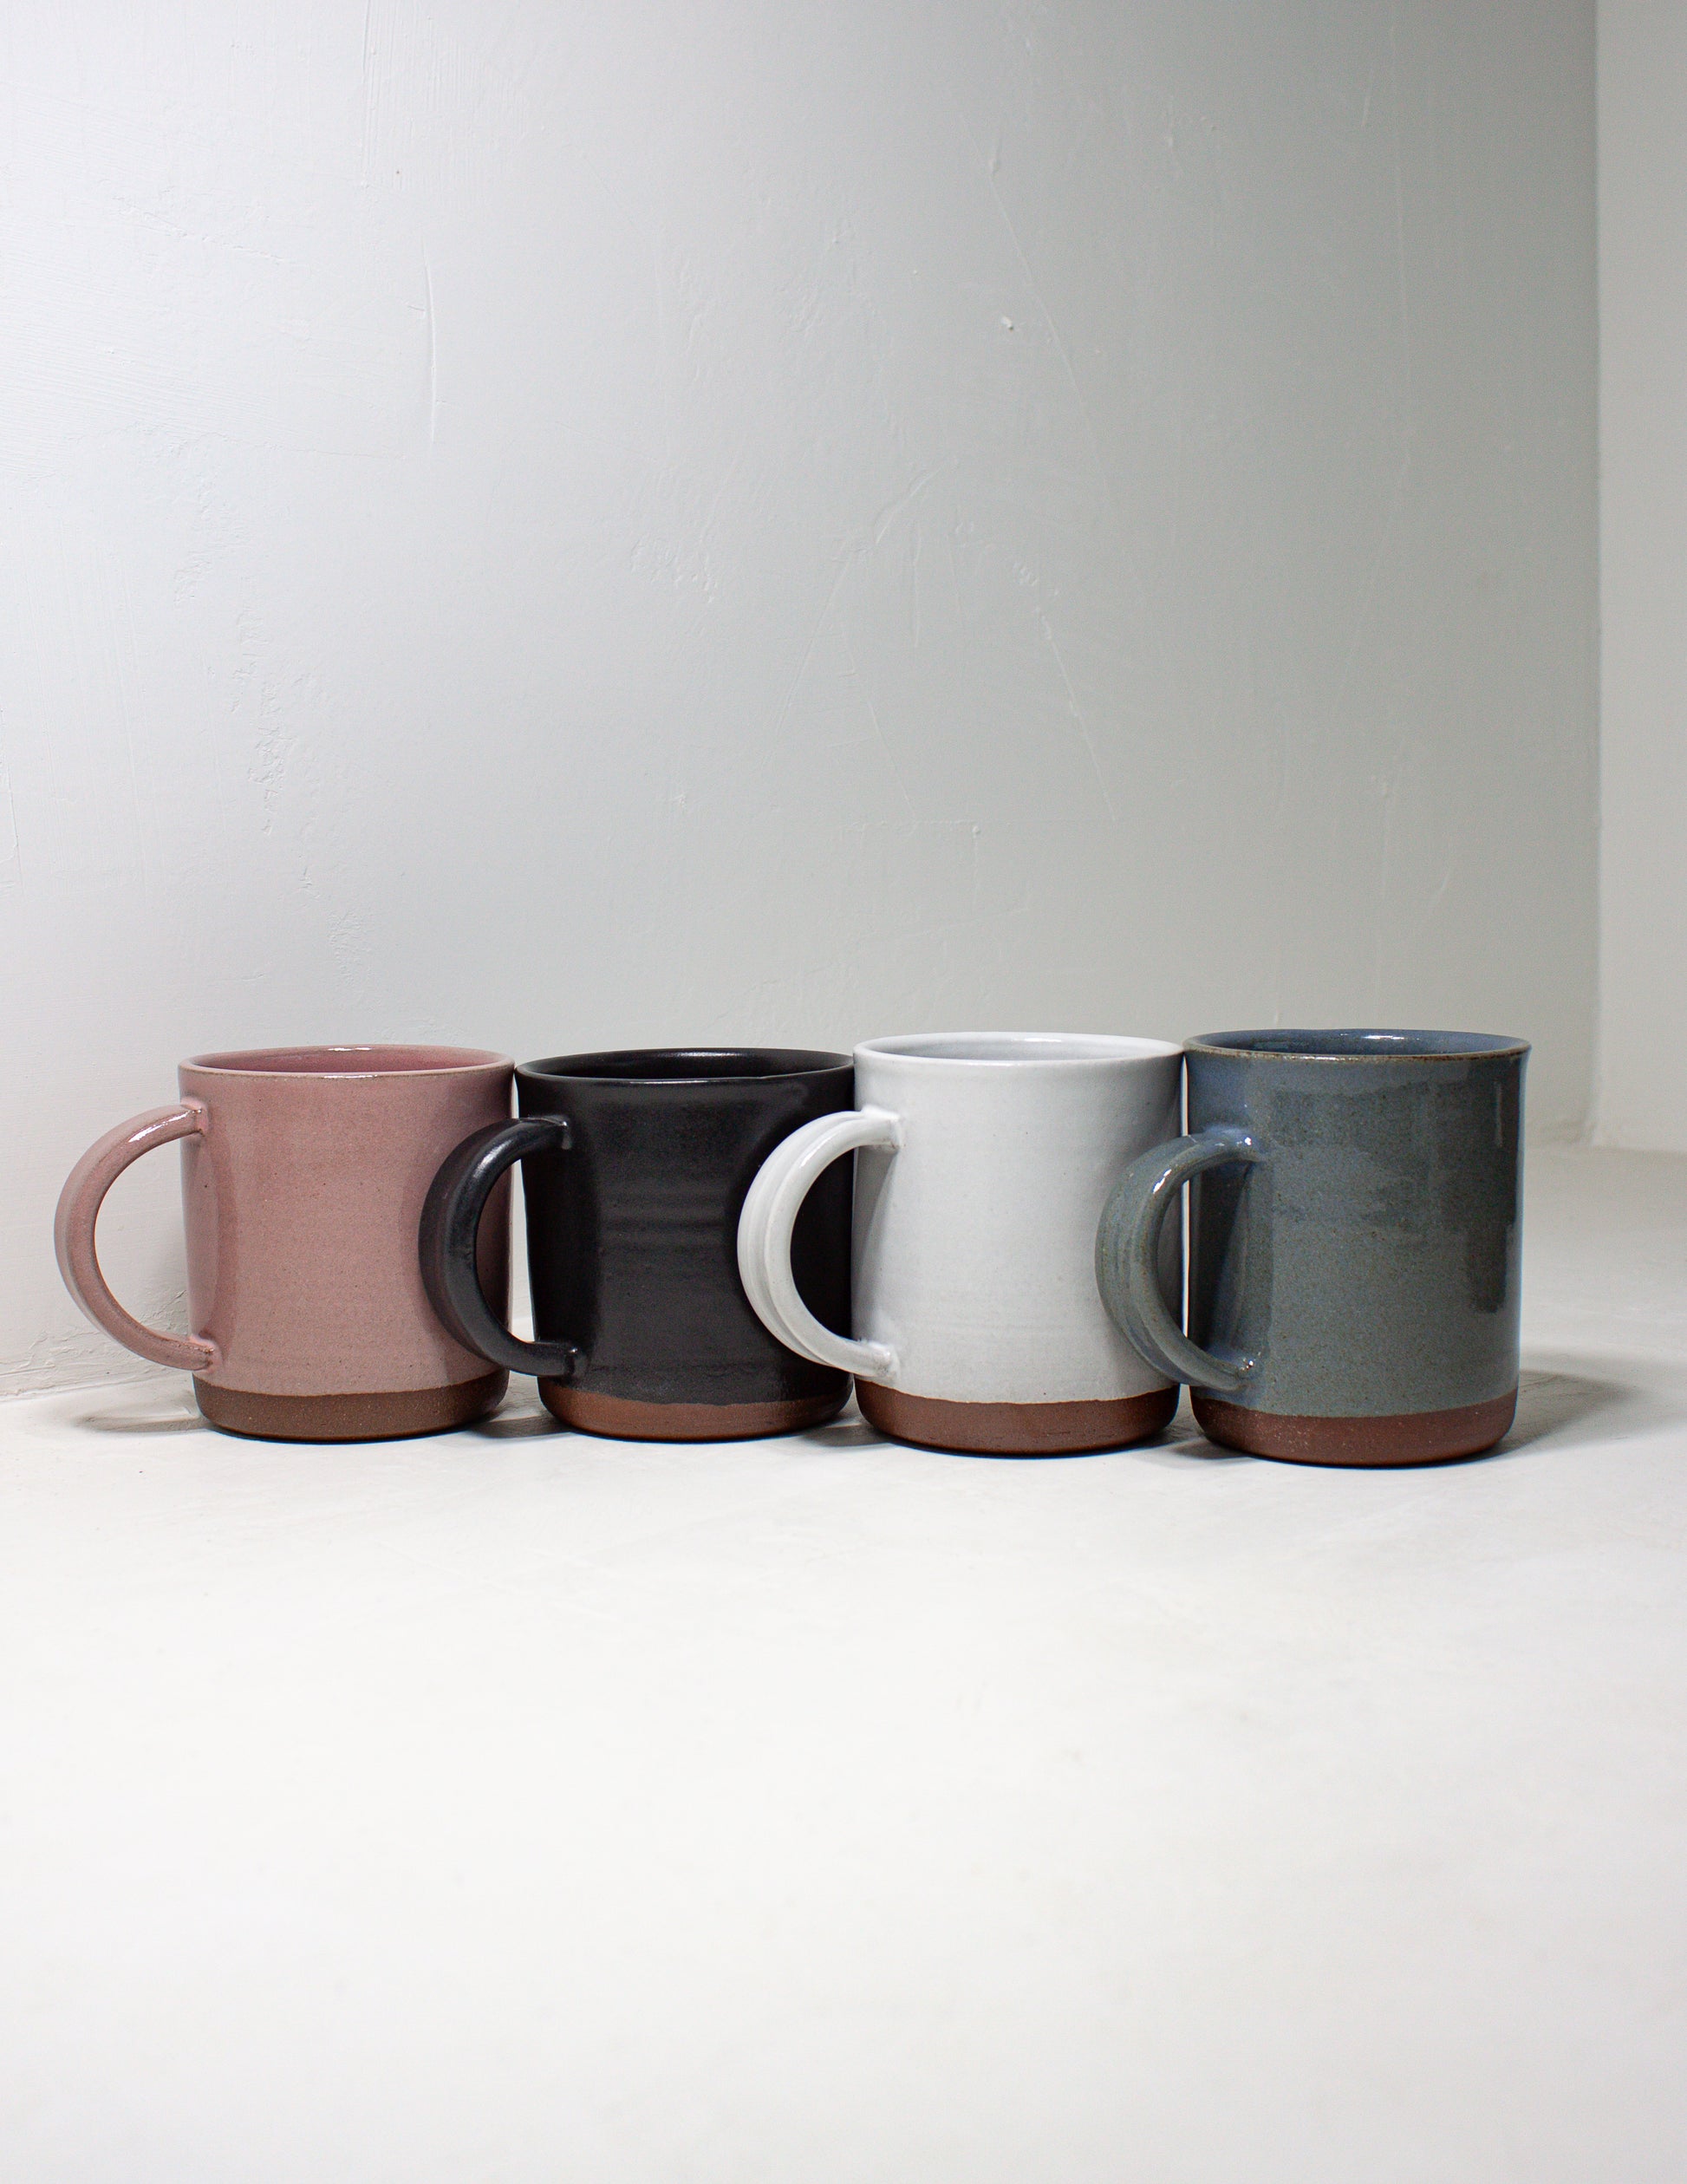 Group of handmade coffee mugs